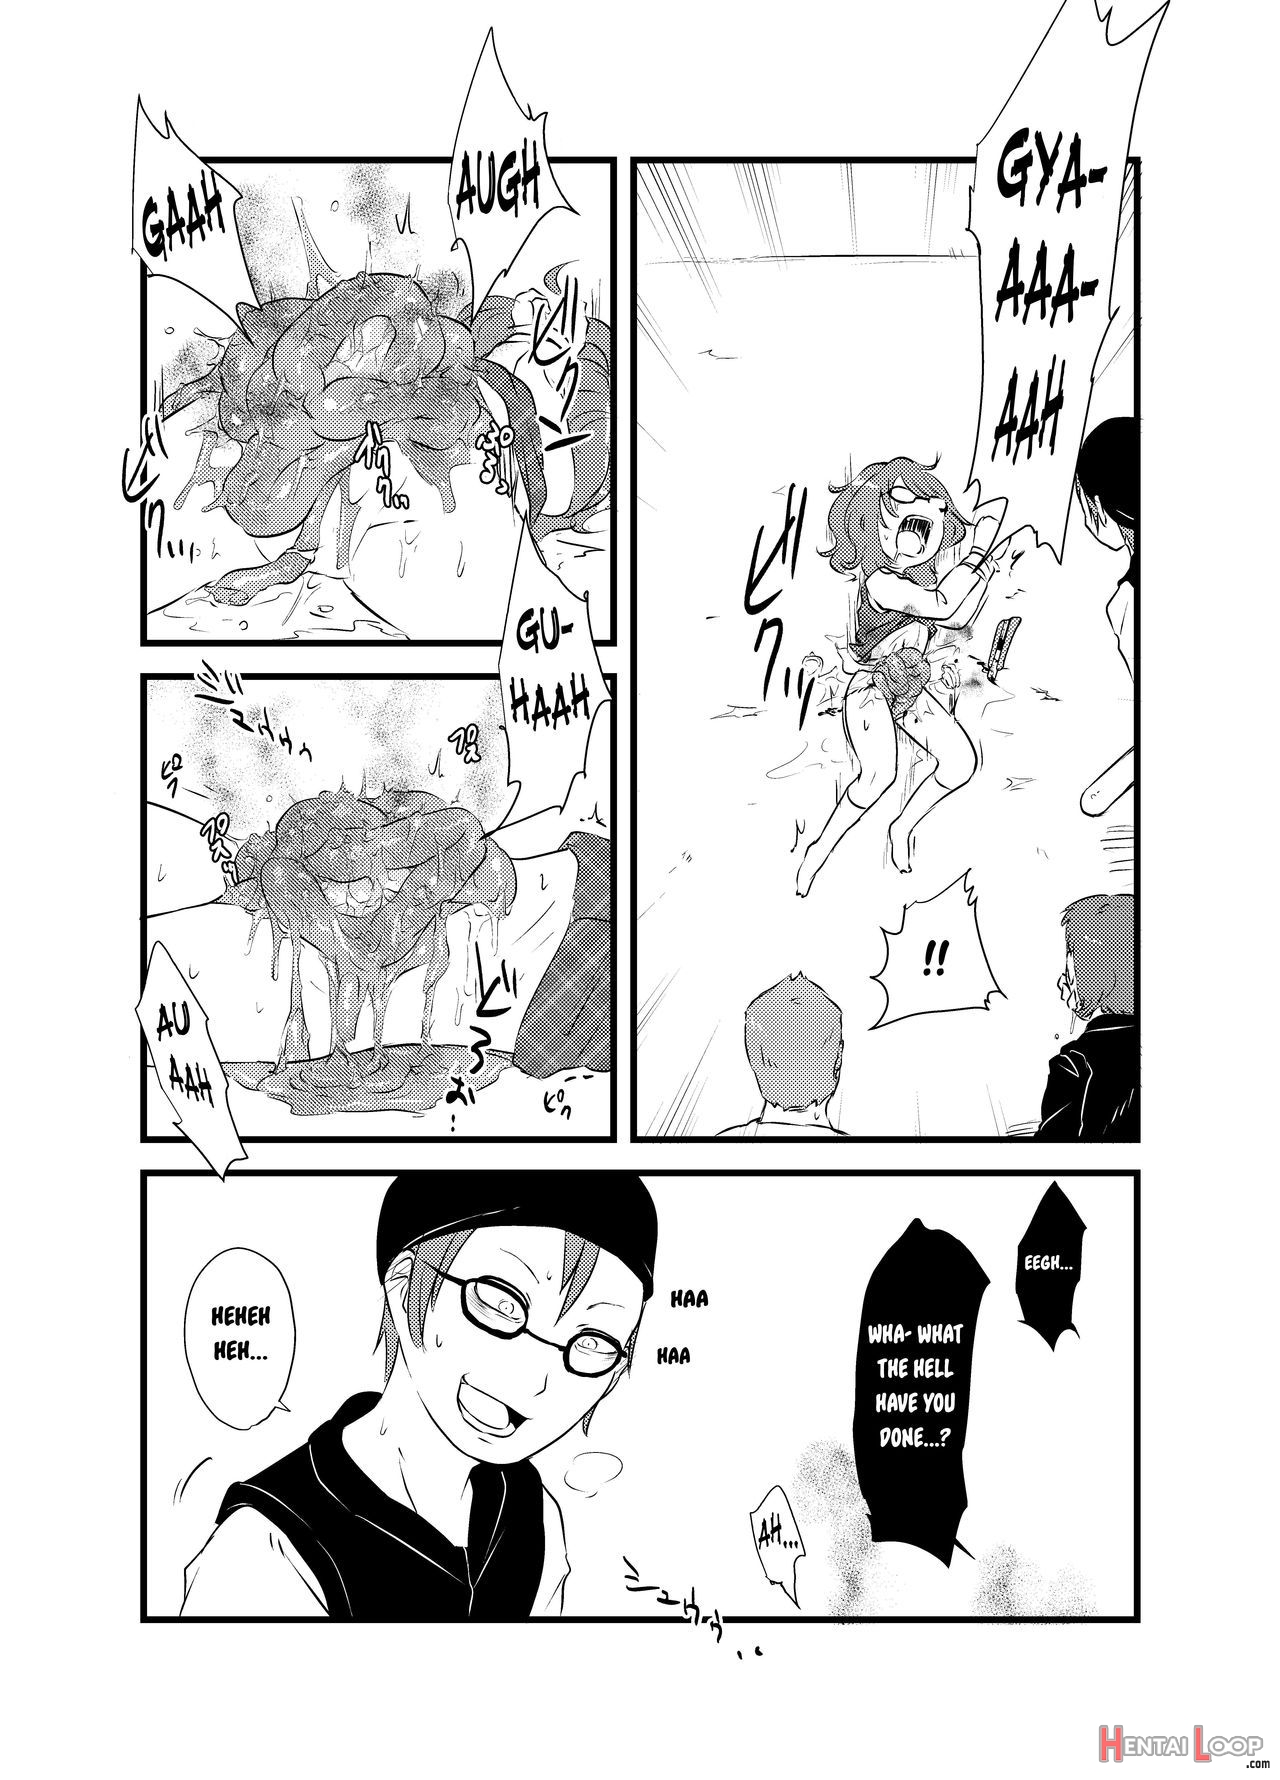 Sumirekochan's Pussy page 23